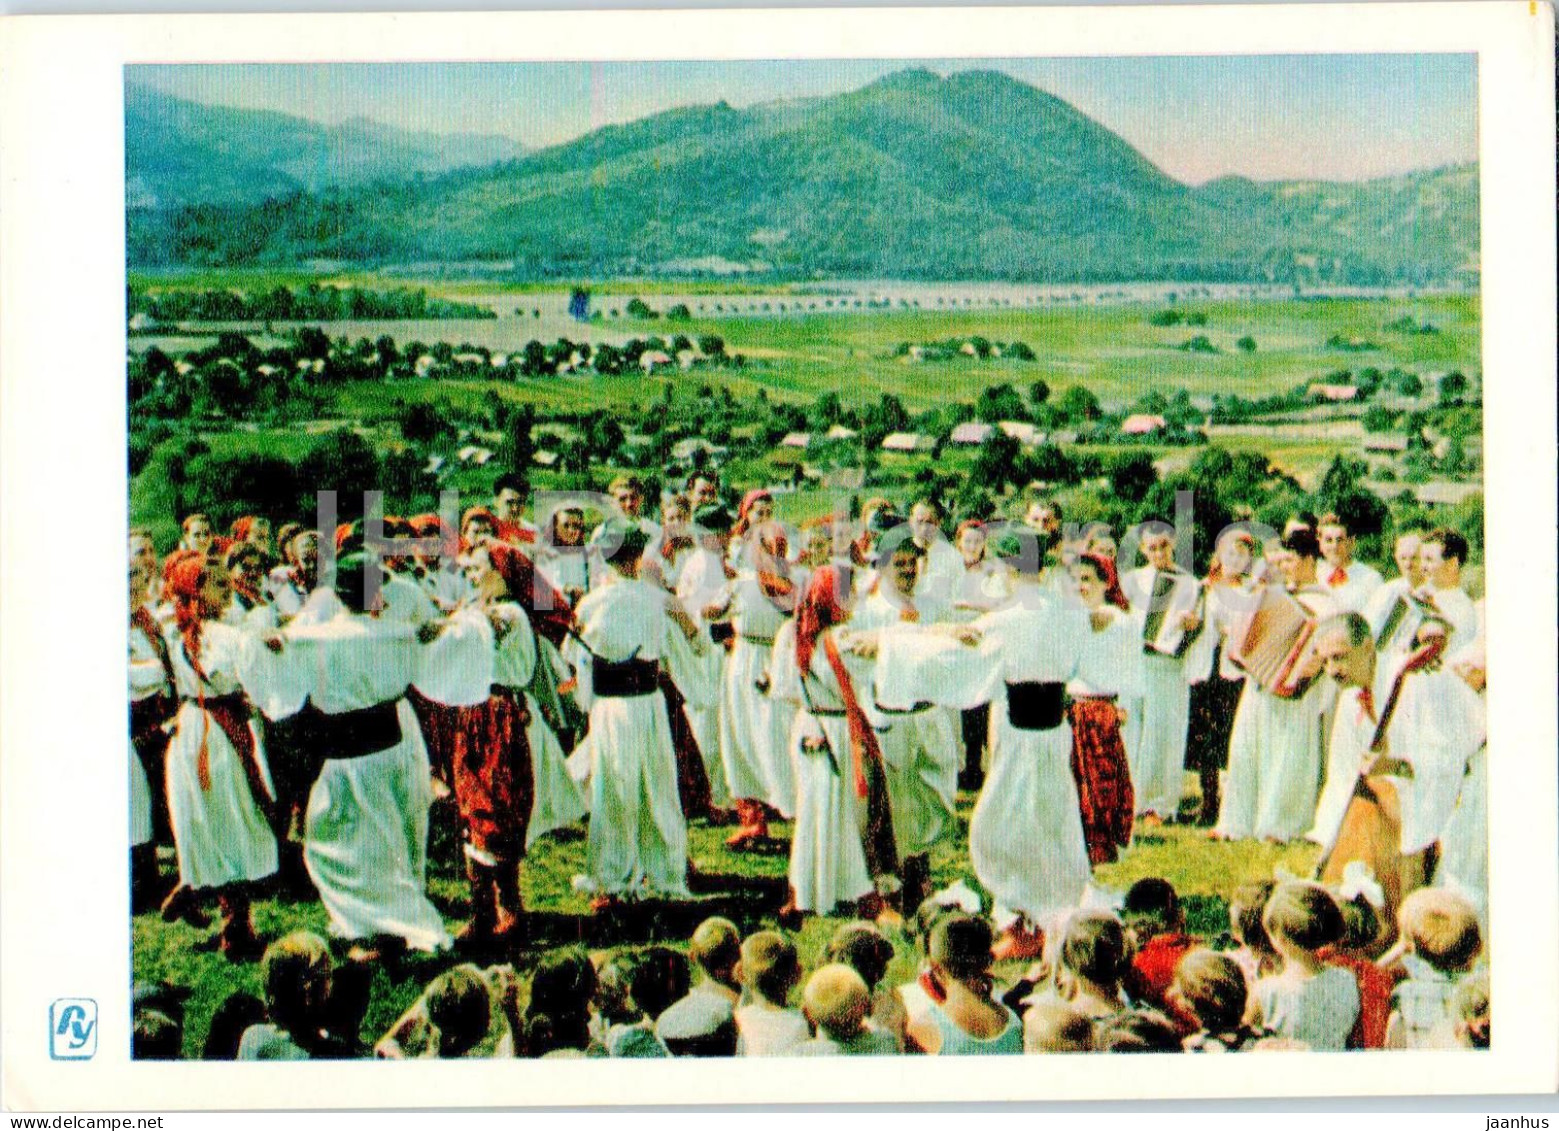 Carpathian Mountains - Karpaty - Ensemble Of Dance And Song Borzhava - Folk Costumes - 1962 - Ukraine USSR - Unused - Ukraine